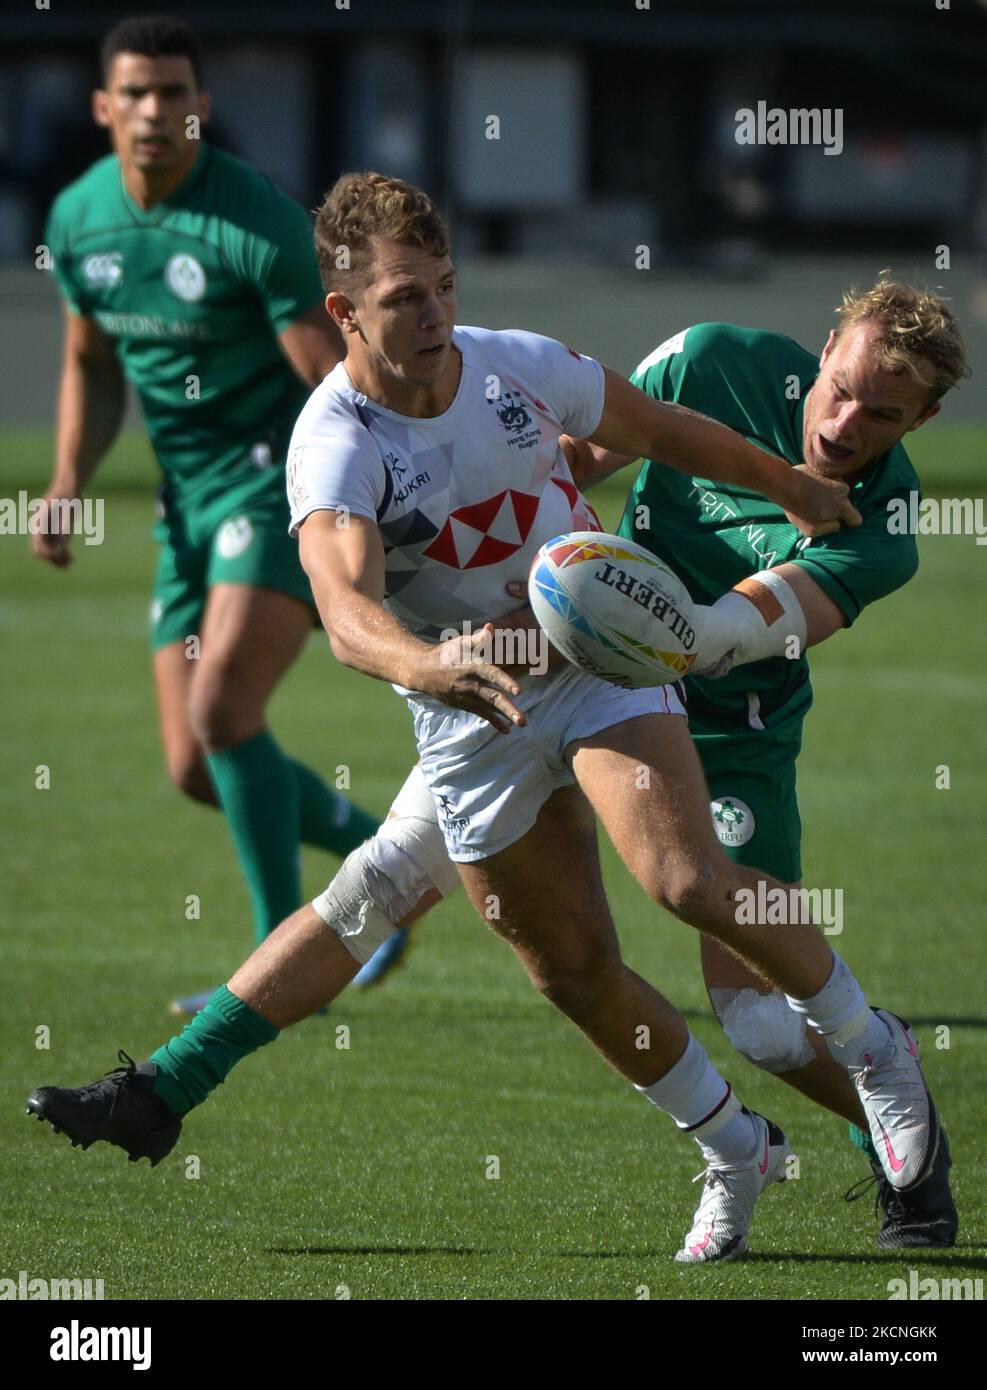 Hsbc world rugby seven series 7th place play off match immagini e  fotografie stock ad alta risoluzione - Alamy